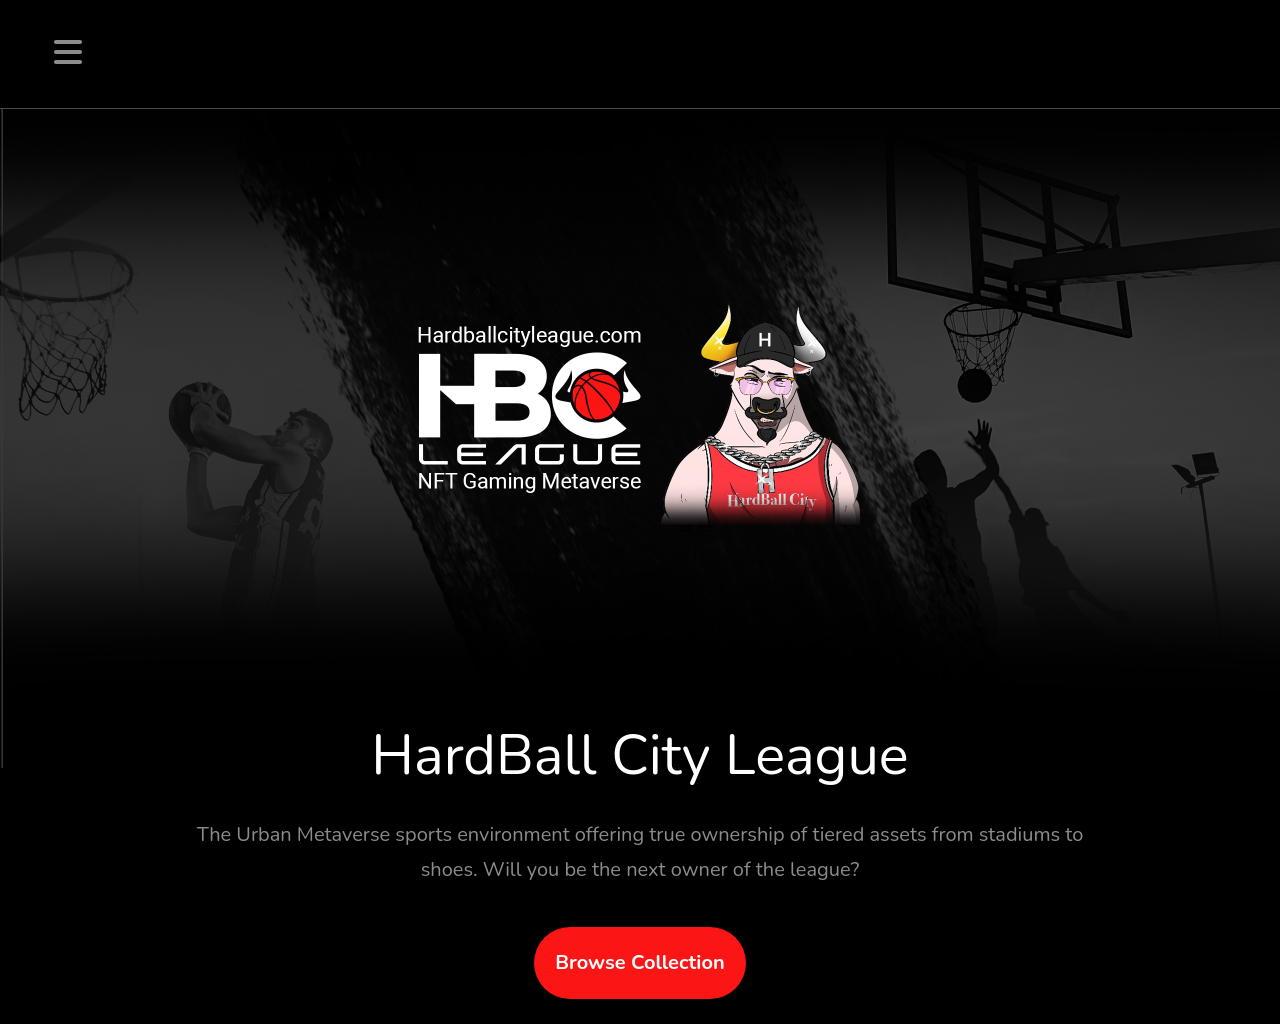 hardballcityleague.com